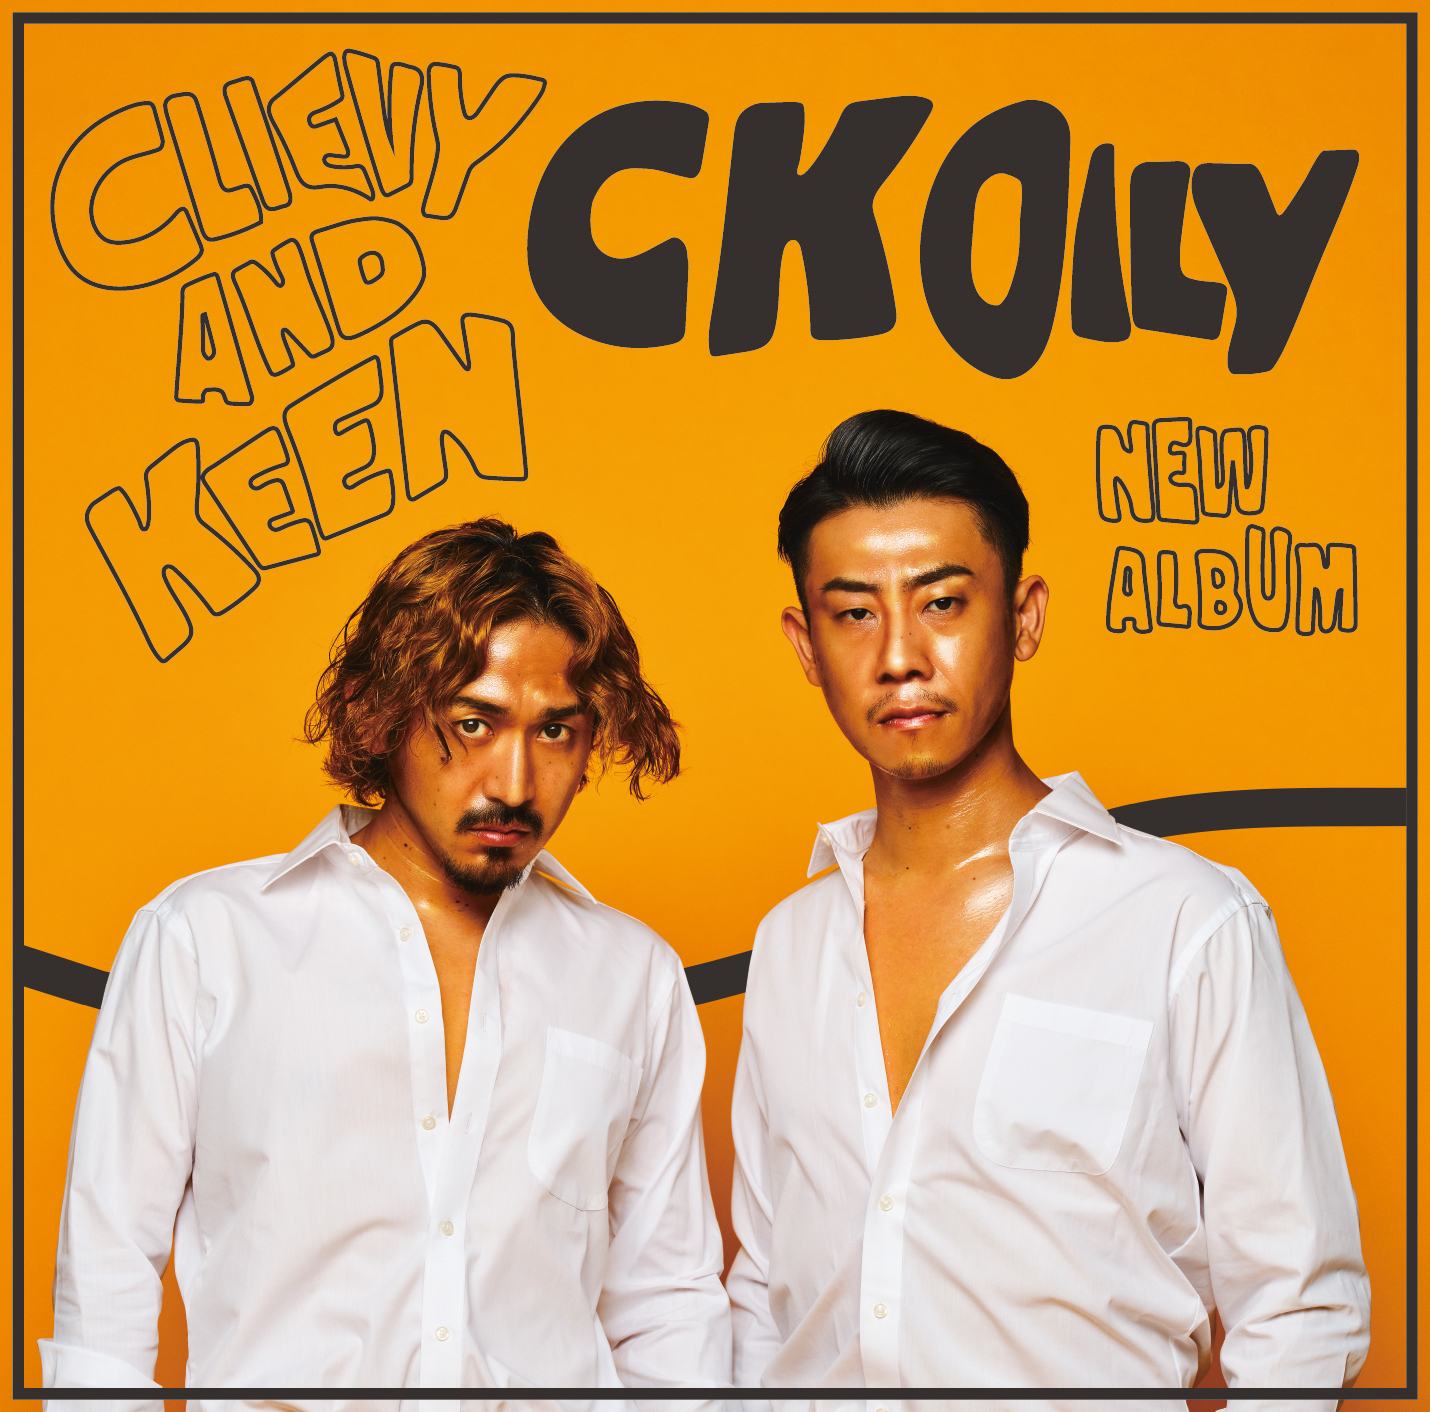 New Albumck Oily C K Clievy Keen